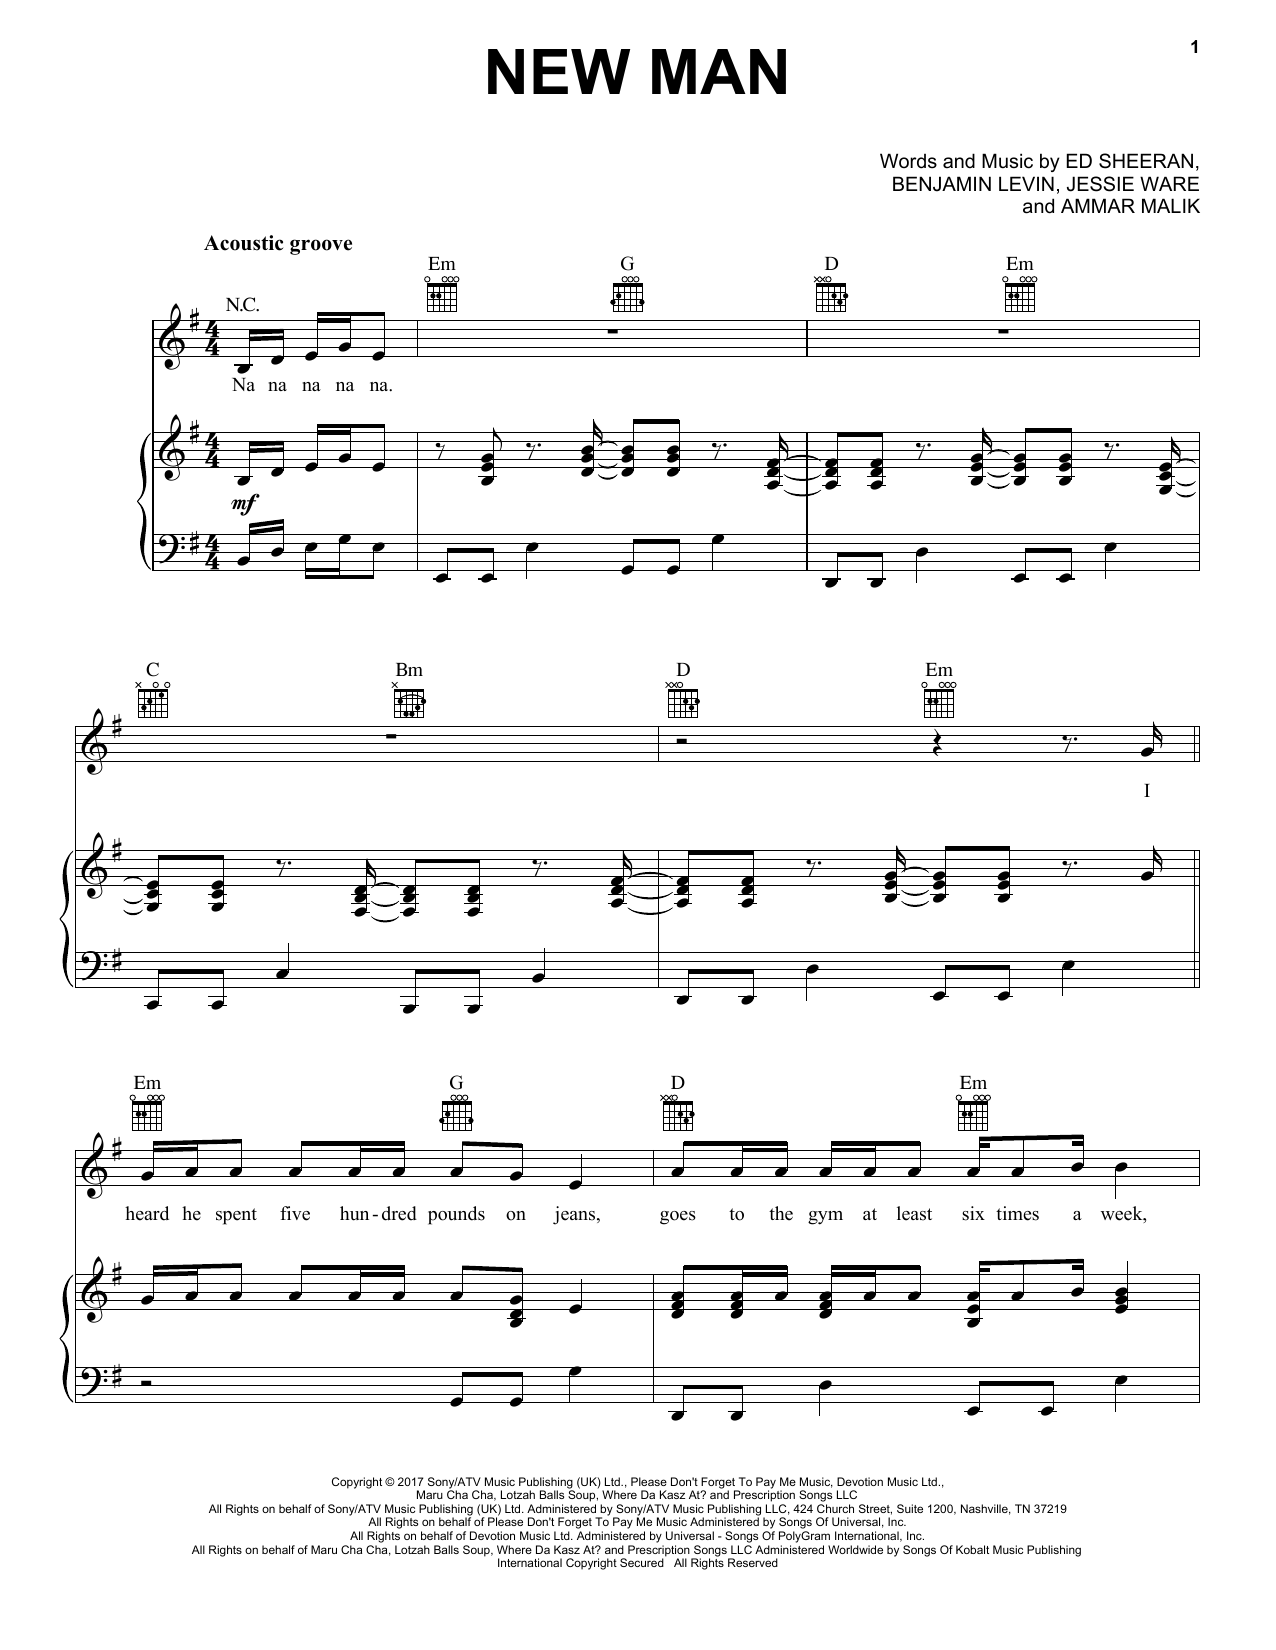 Ed Sheeran New Man Sheet Music Notes & Chords for Guitar Tab - Download or Print PDF